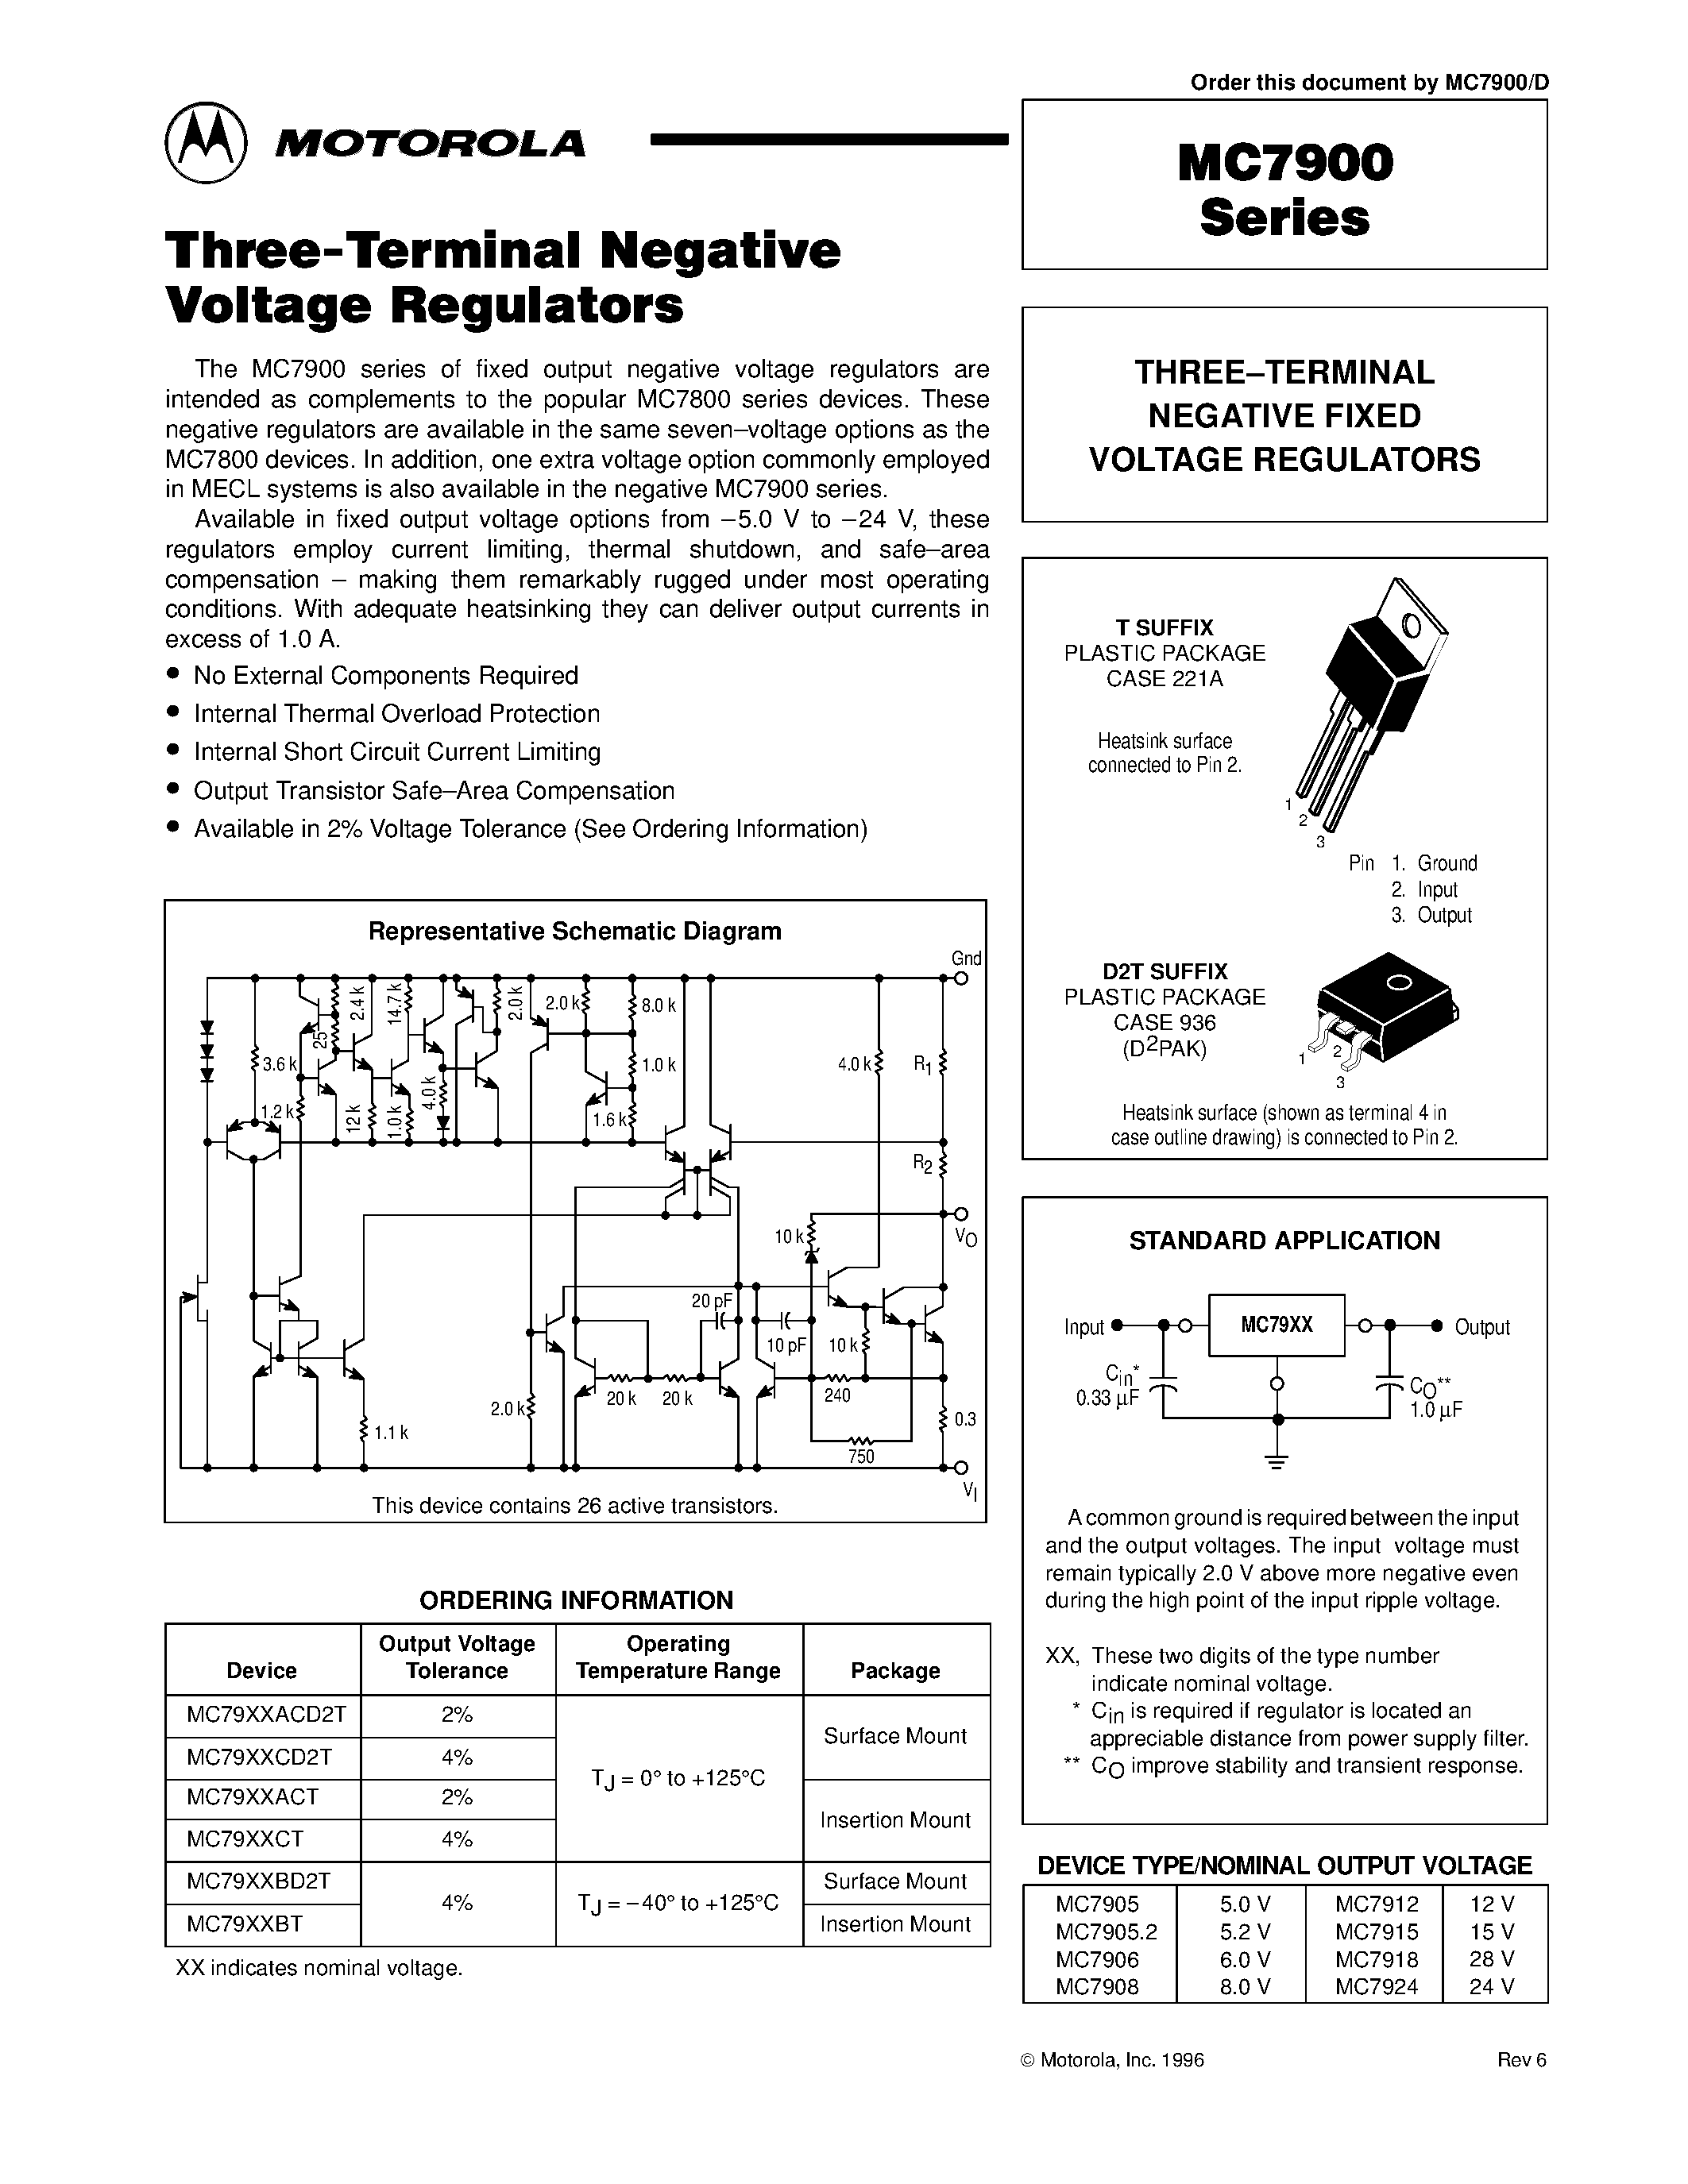 Datasheet MC7905ACT - THREE-TERMINAL NEGATIVE FIXED VOLTAGE REGULATORS page 1